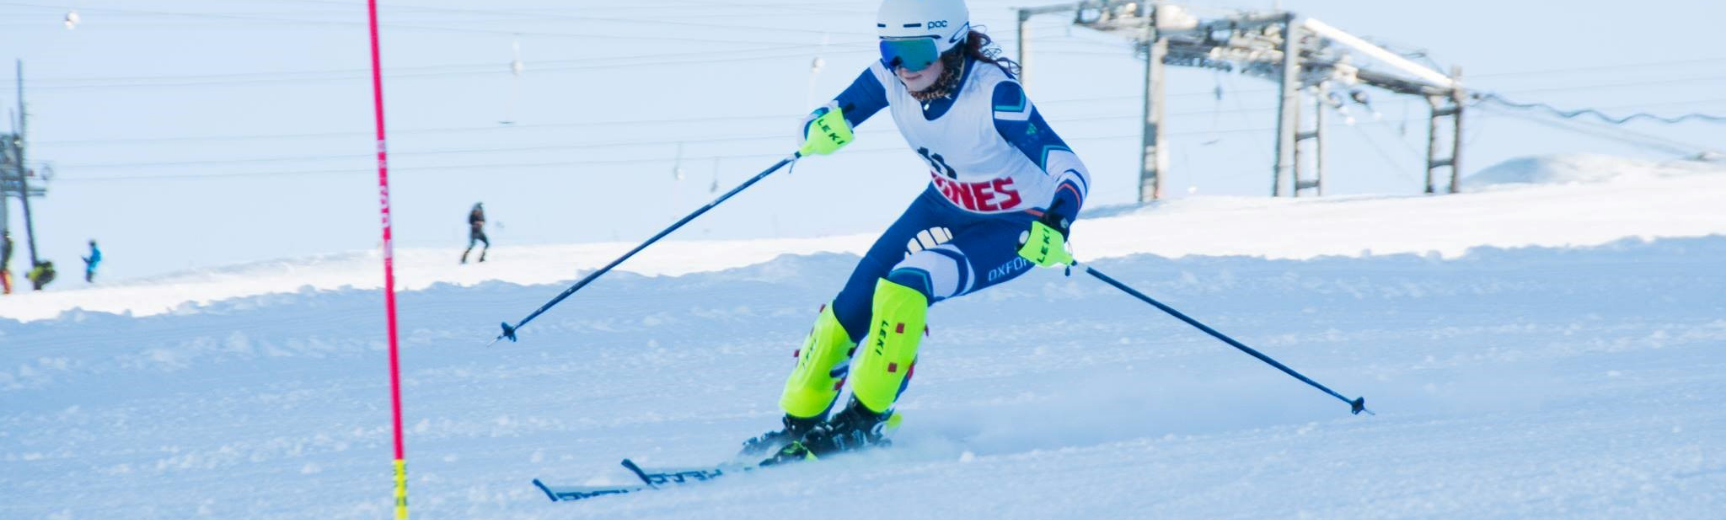 A skier tackling a slalom course